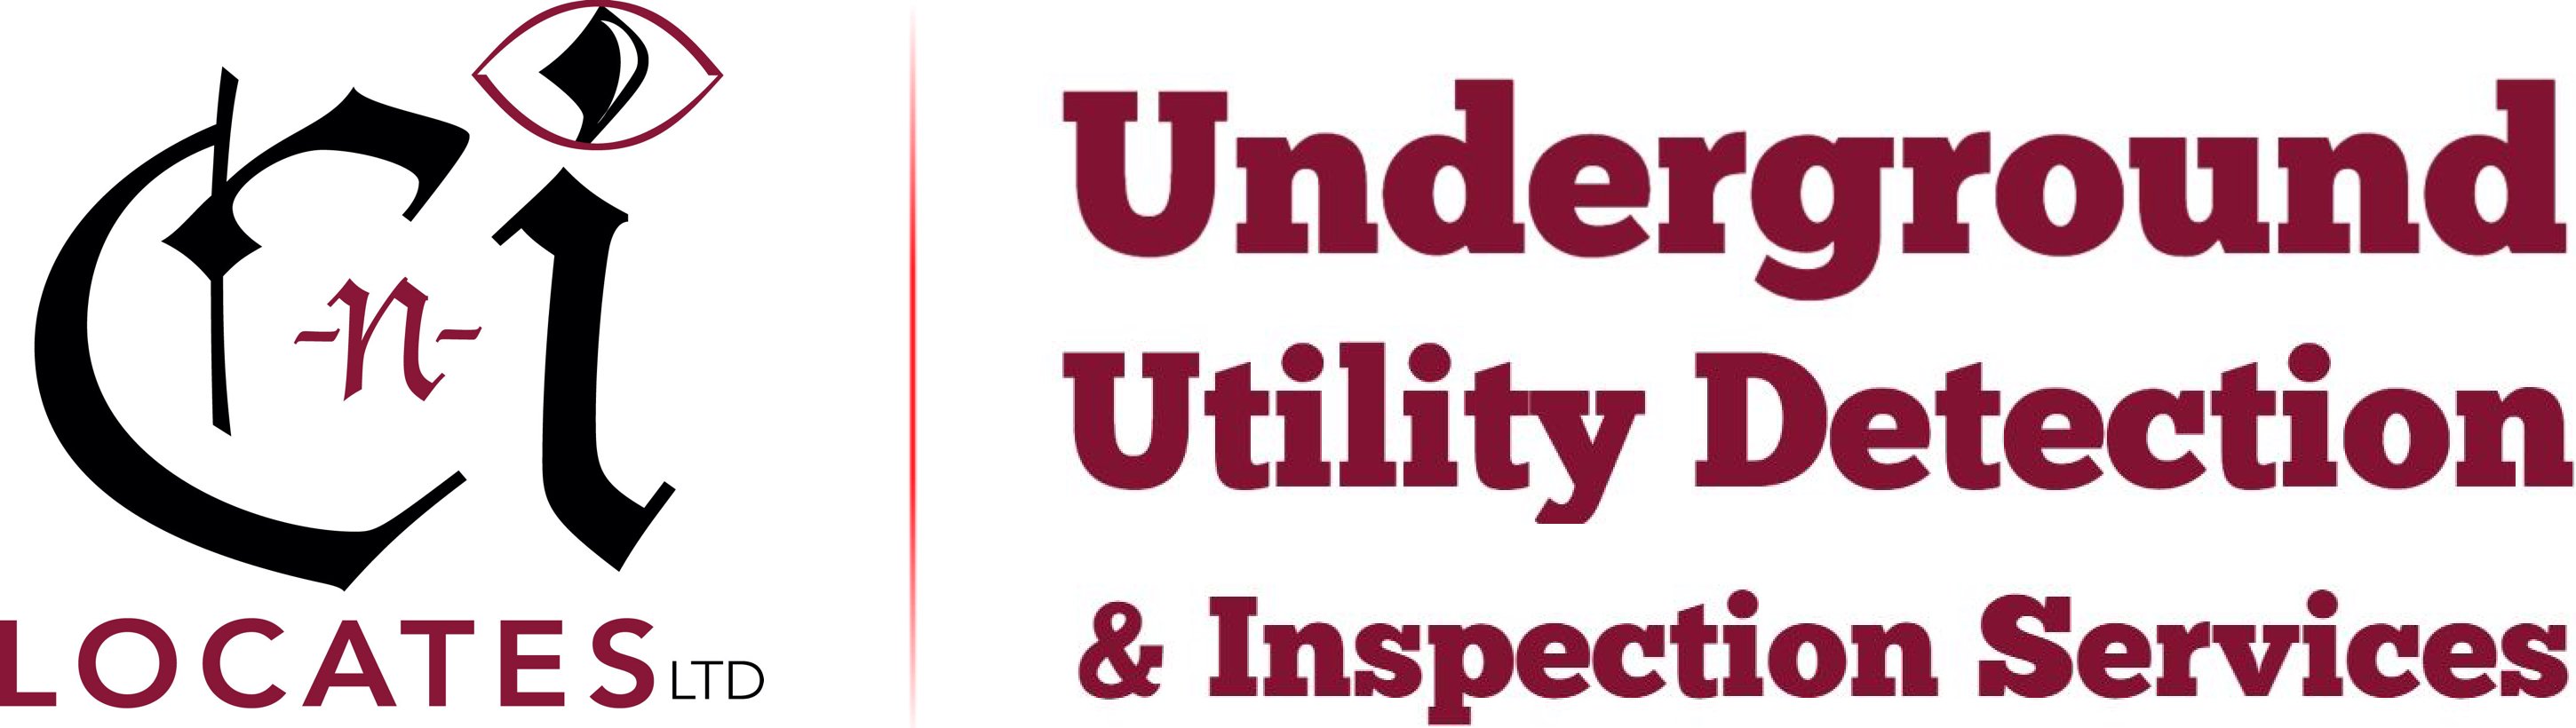 Western WA Underground Utility Location & Inspection Services